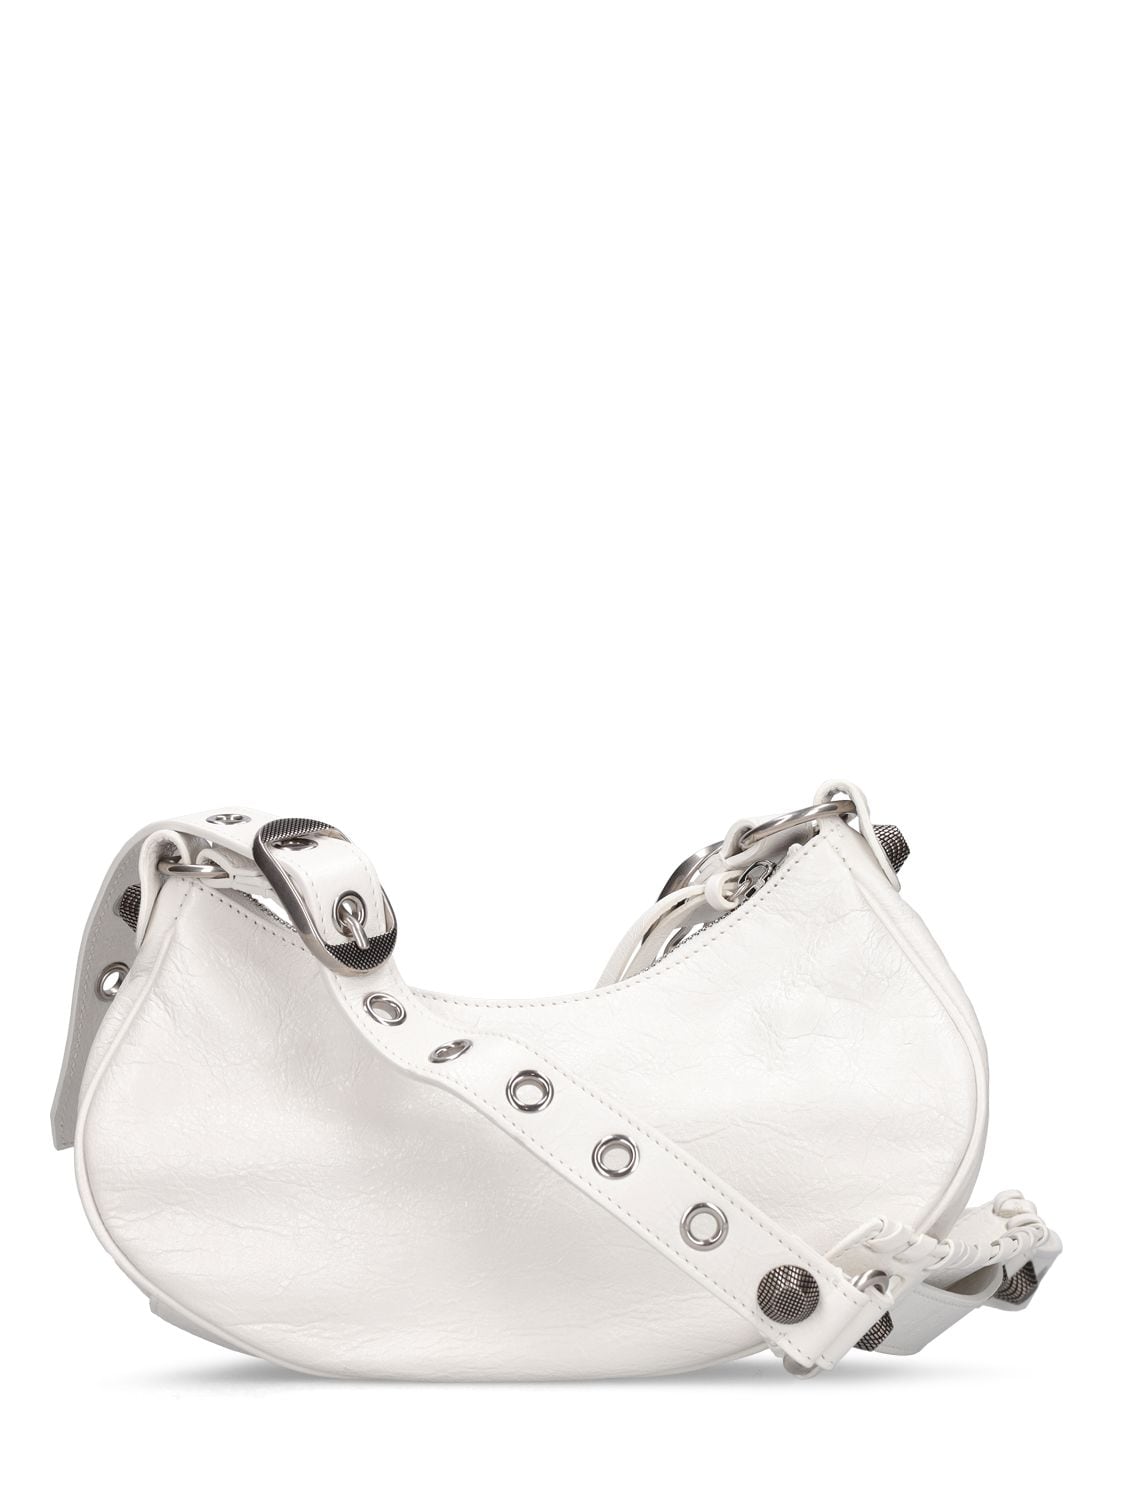 Shop Balenciaga Xs Le Cagole Leather Shoulder Bag In Optic White